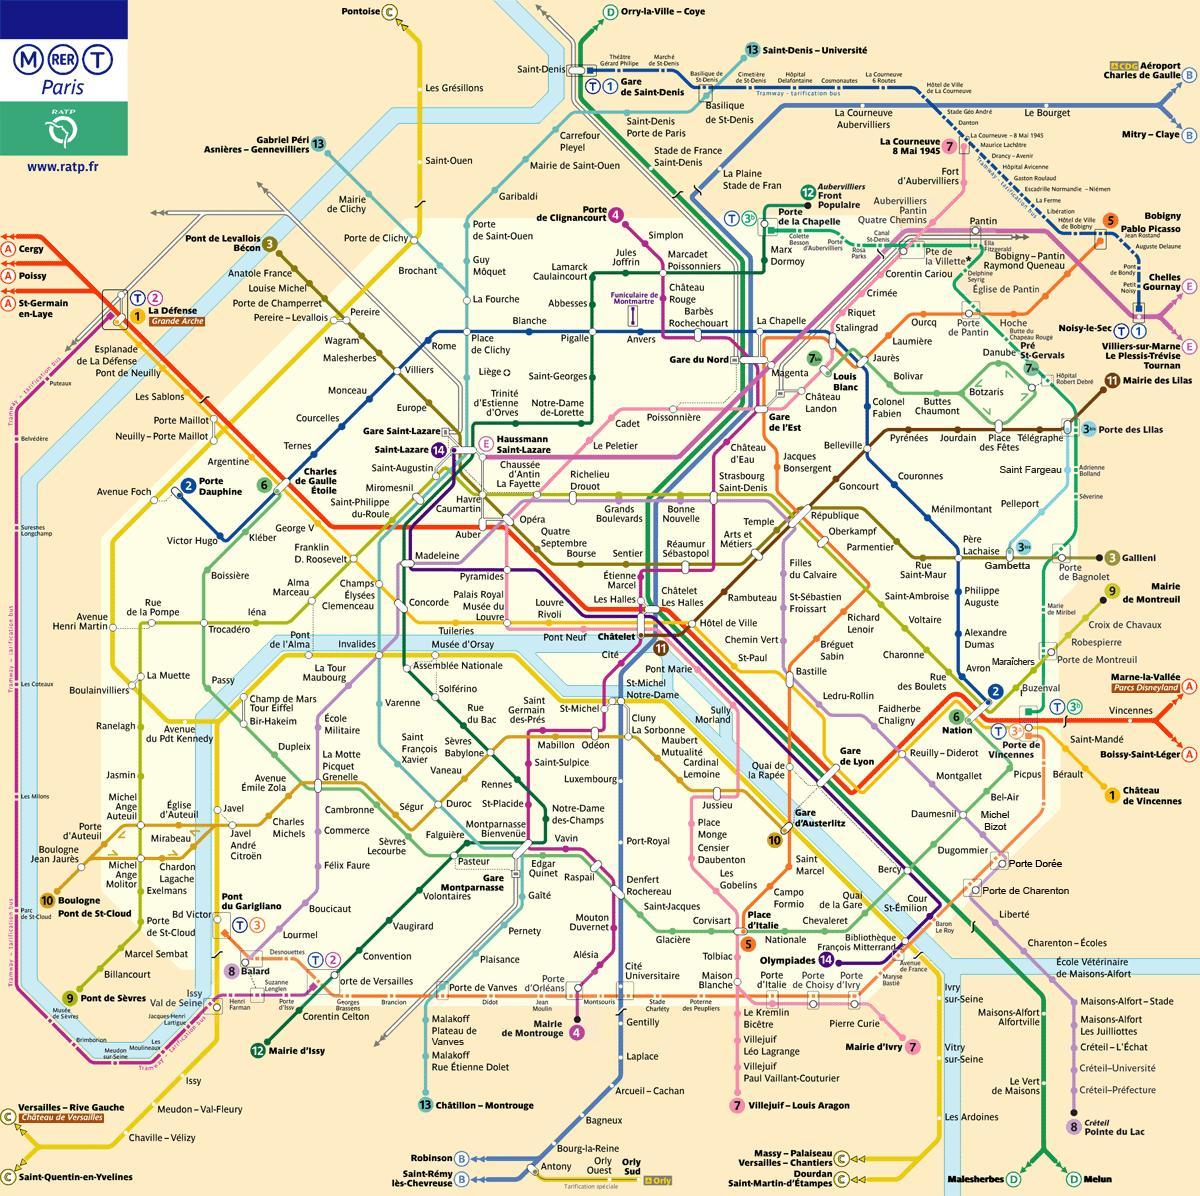 Paris ratp map